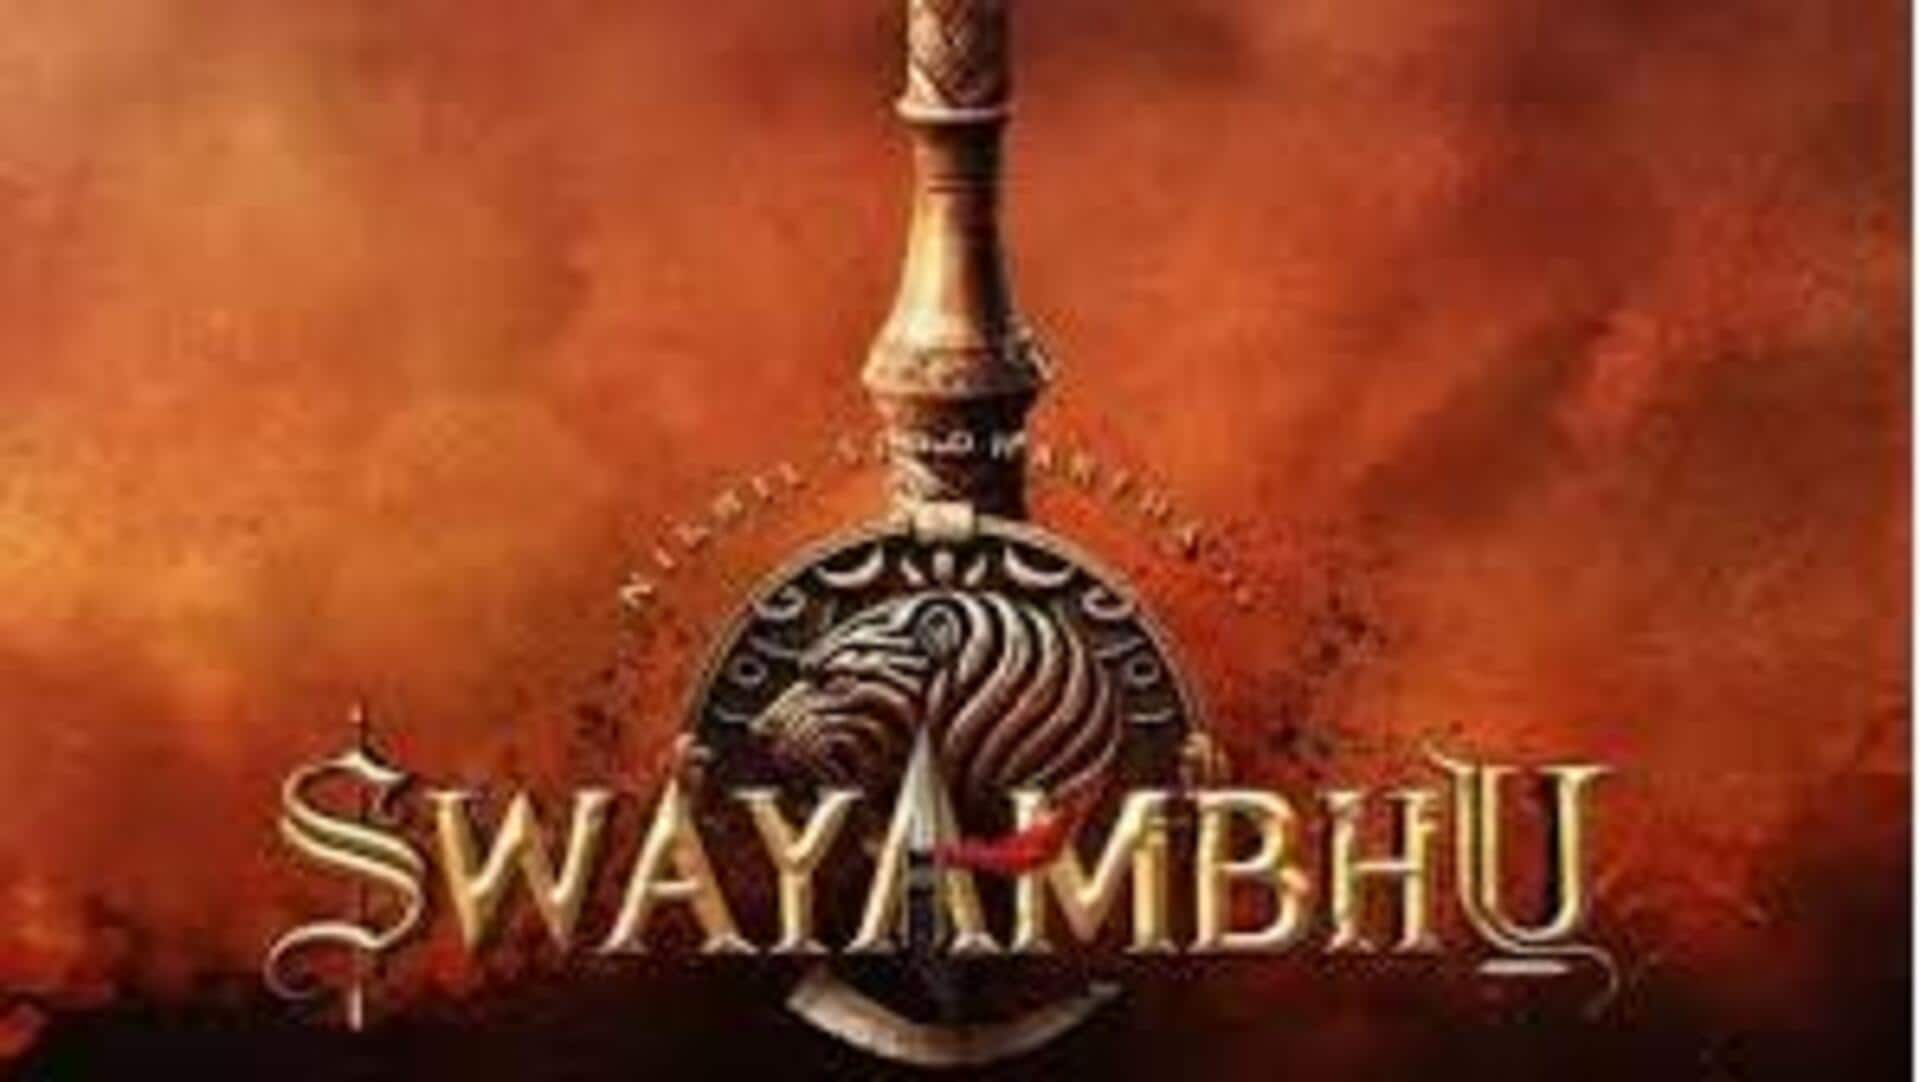 Swayambhu: హీరో నిఖిల్ ప్రధాన పాత్రలో స్వయంభు.. సినిమాపై హైప్ పెంచిన పోస్ట్